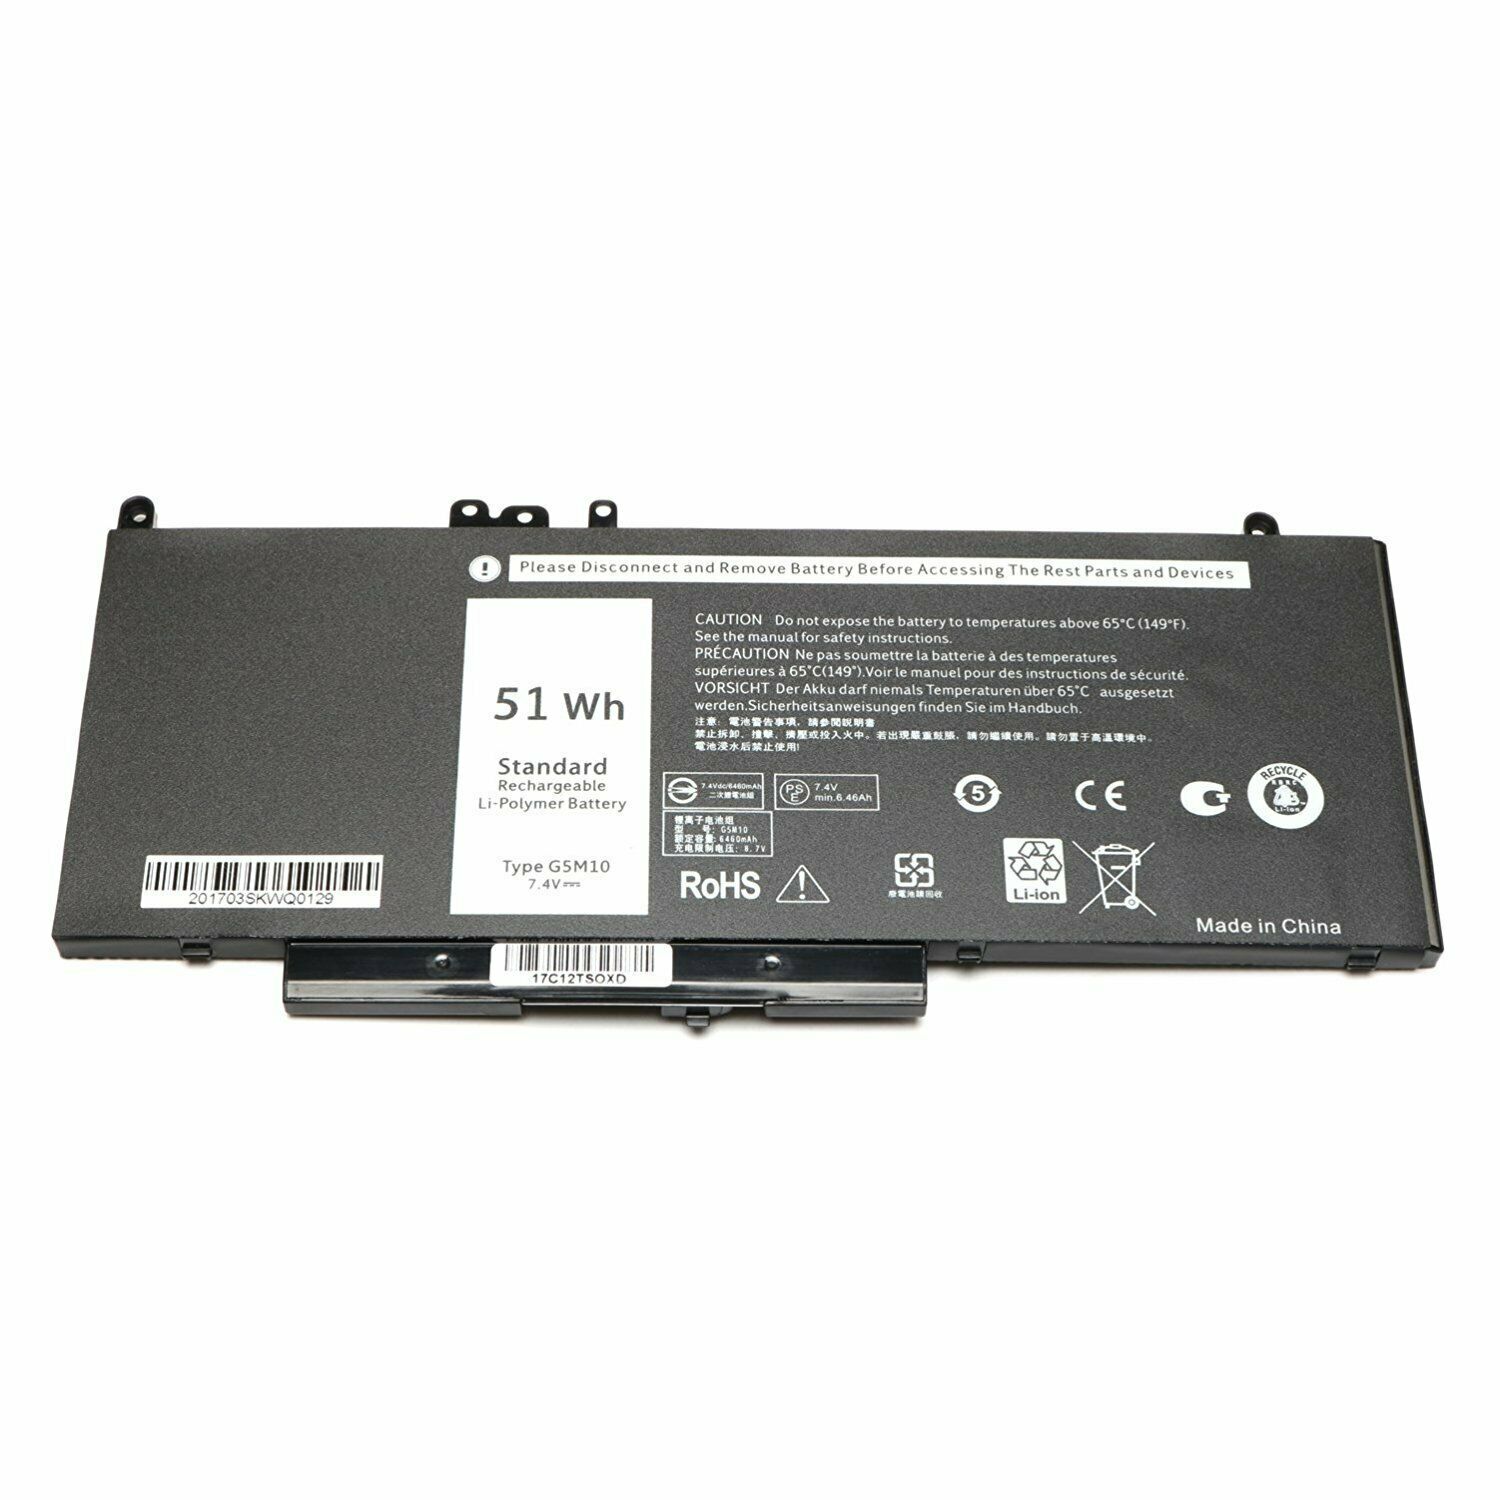 Bateria para G5M10 Dell Latitude E5550 E5450 Notebook 15.6"